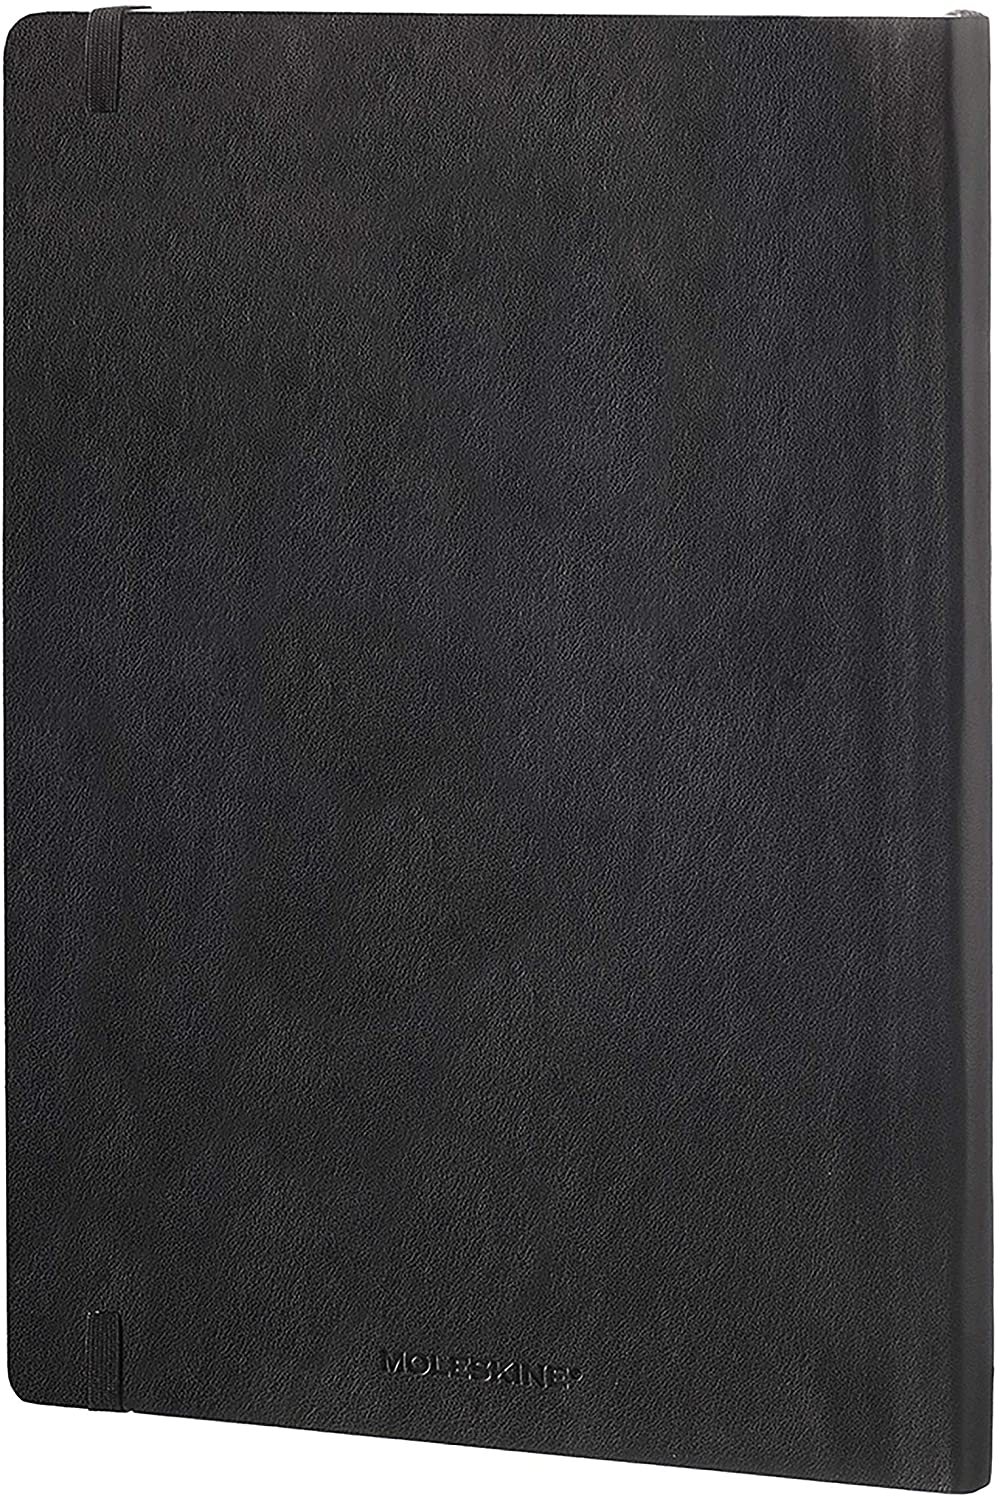 Carnet - Moleskine Classic - Extra Large, Dotted, Soft Cover - Black | Moleskine